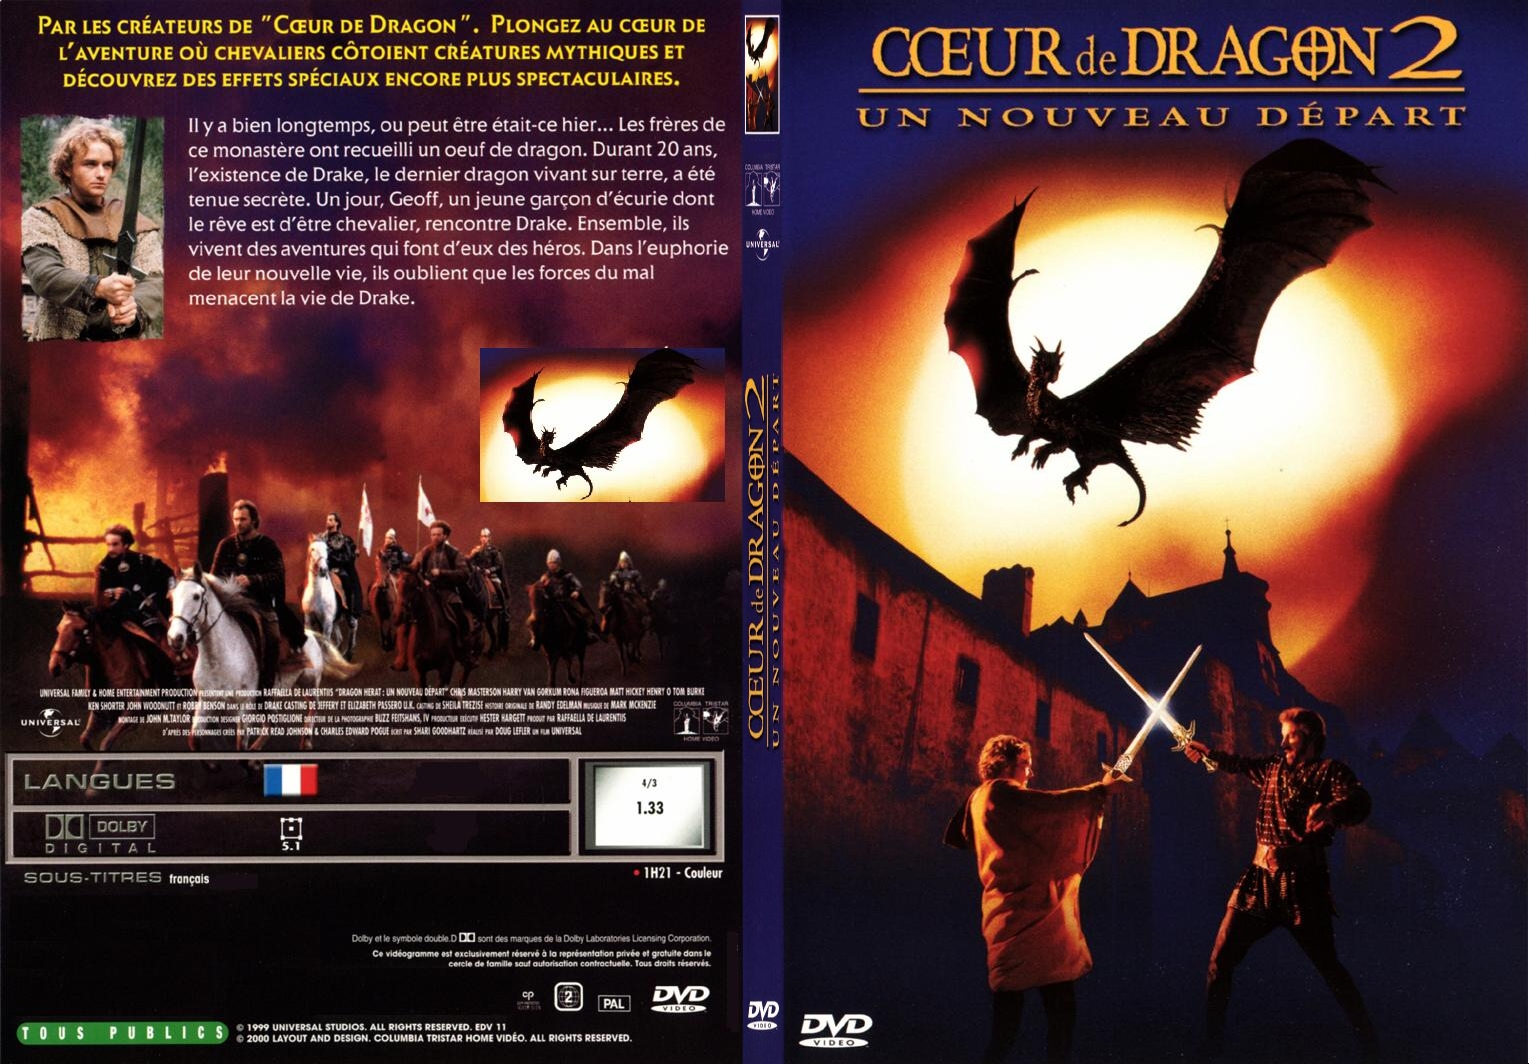 Jaquette DVD Coeur de dragon 2 - SLIM